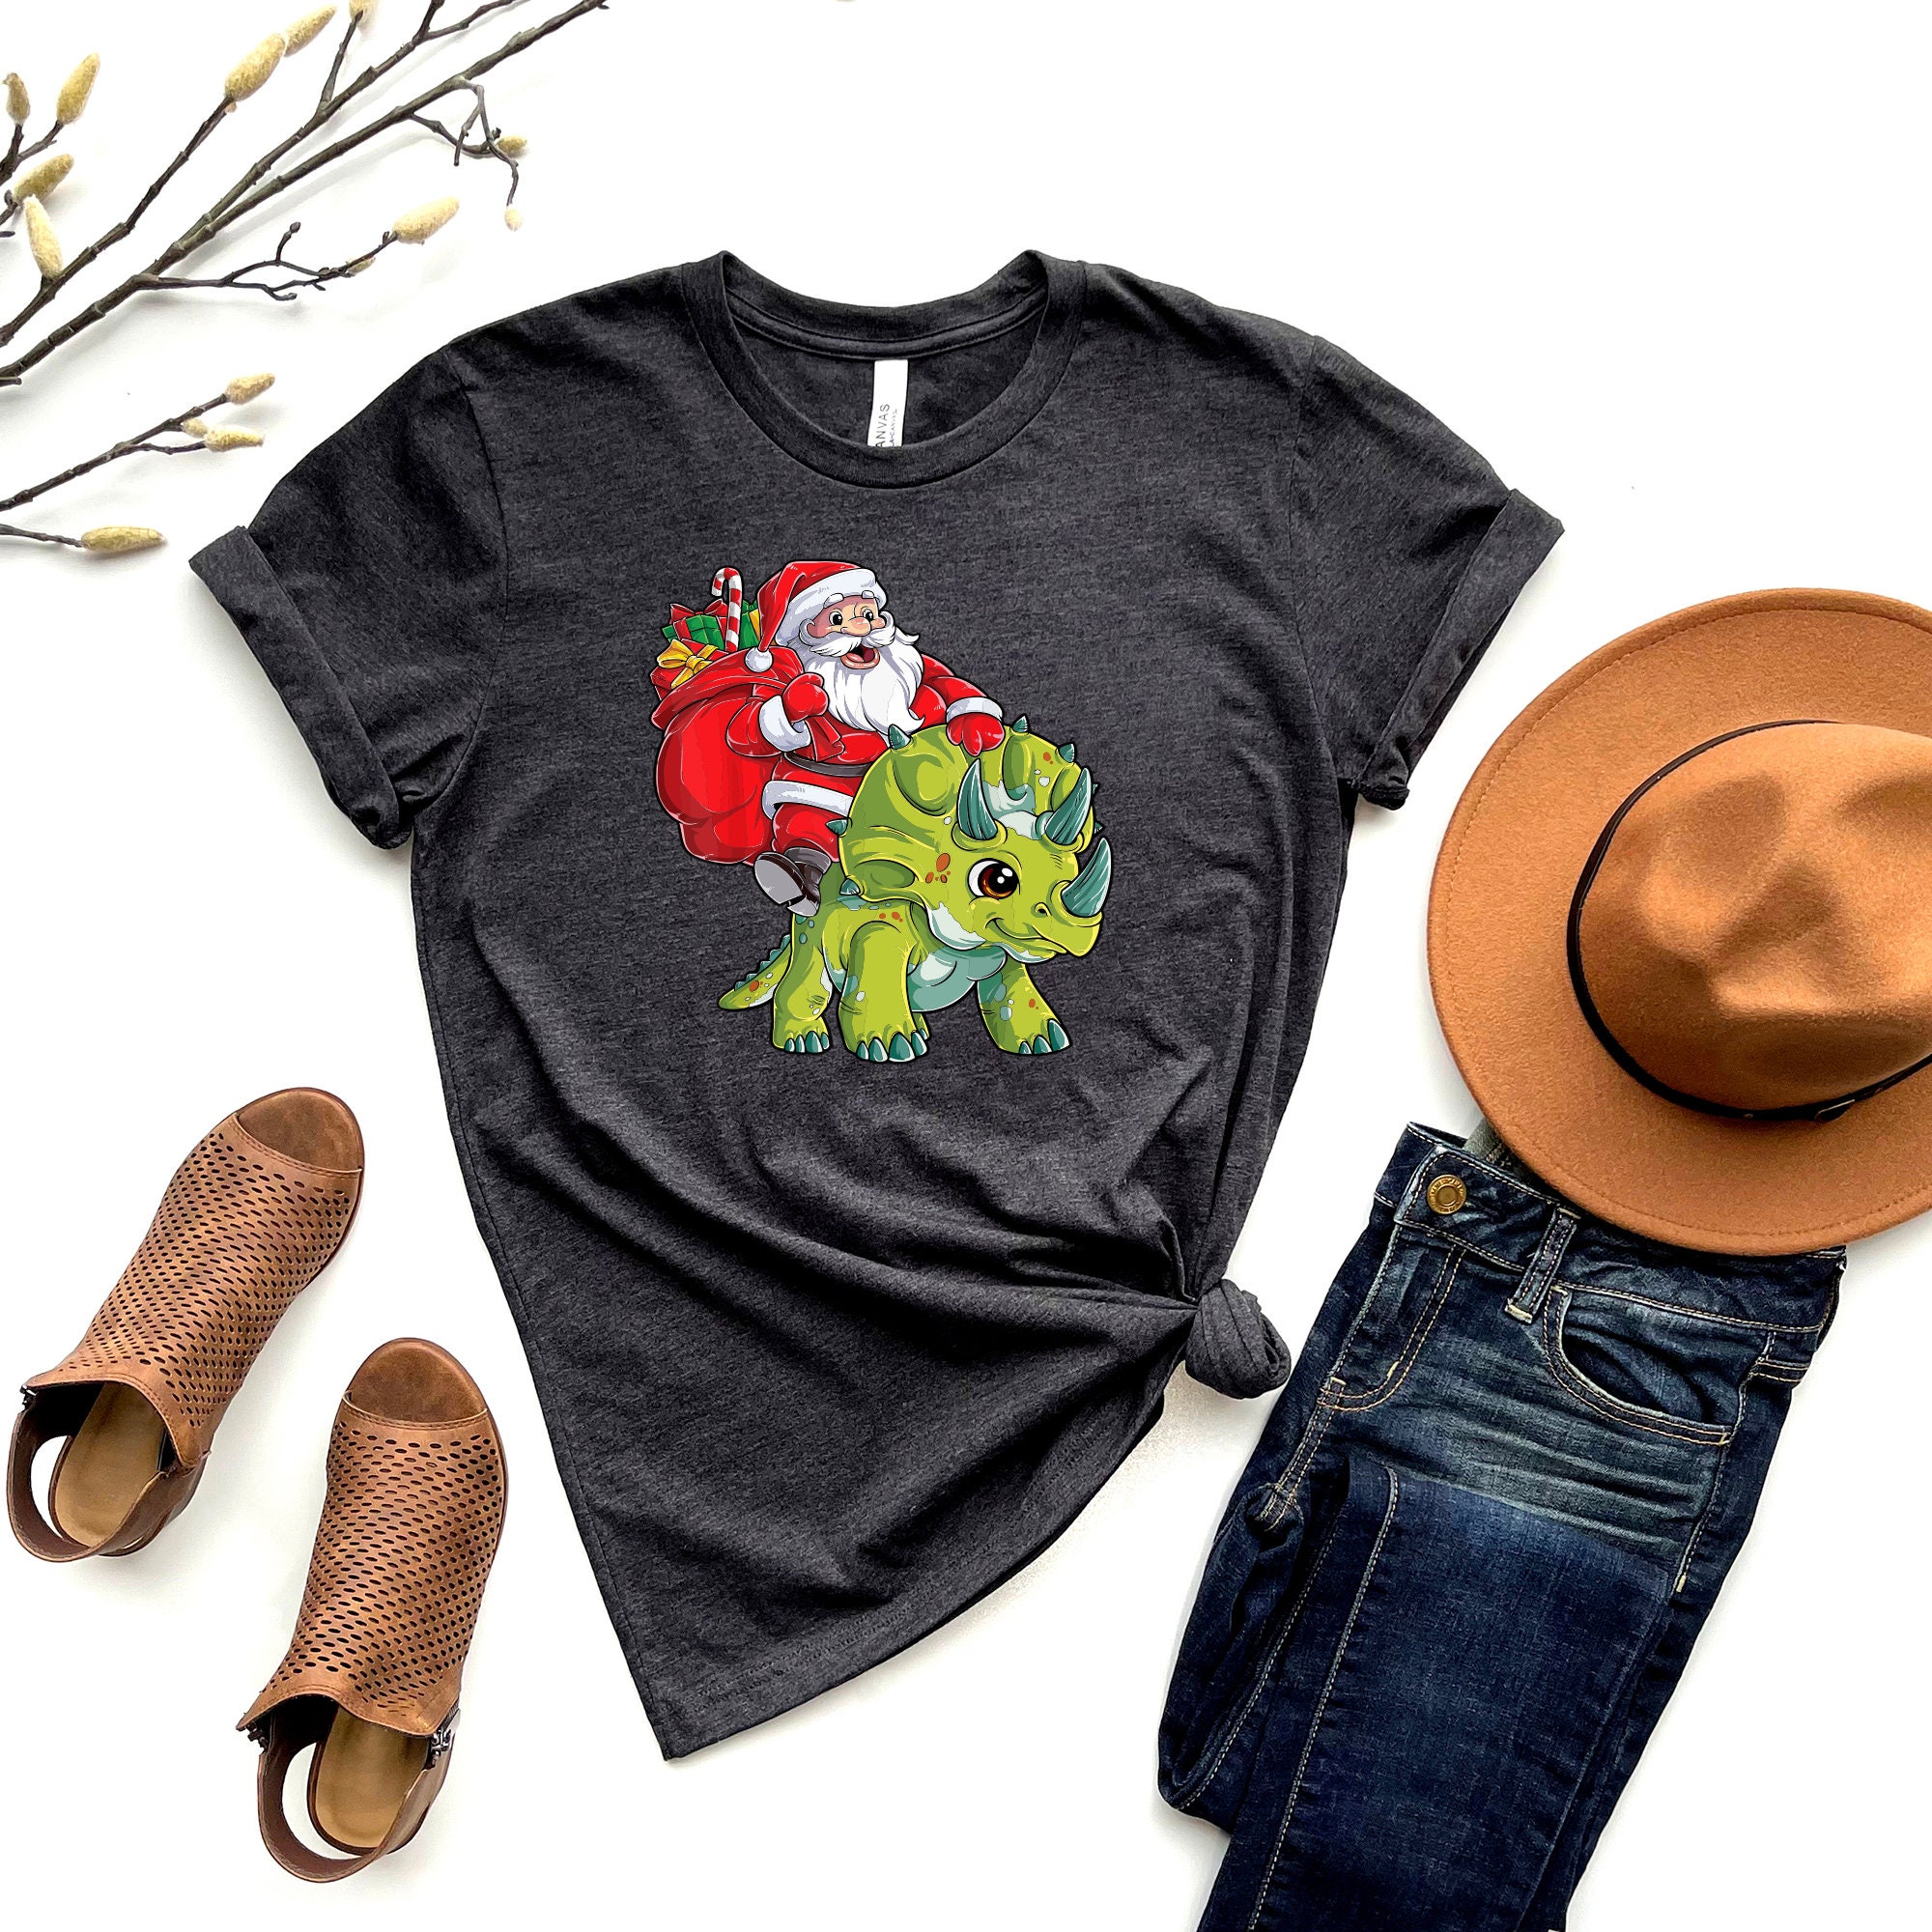 Discover Santa Triceratops Shirt For Kids, Christmas Santa Shirt, T-rex Dinosaur Outfit, Santa Snowflake Shirt, Dinosaur Tee For Boys, Christmas Gift